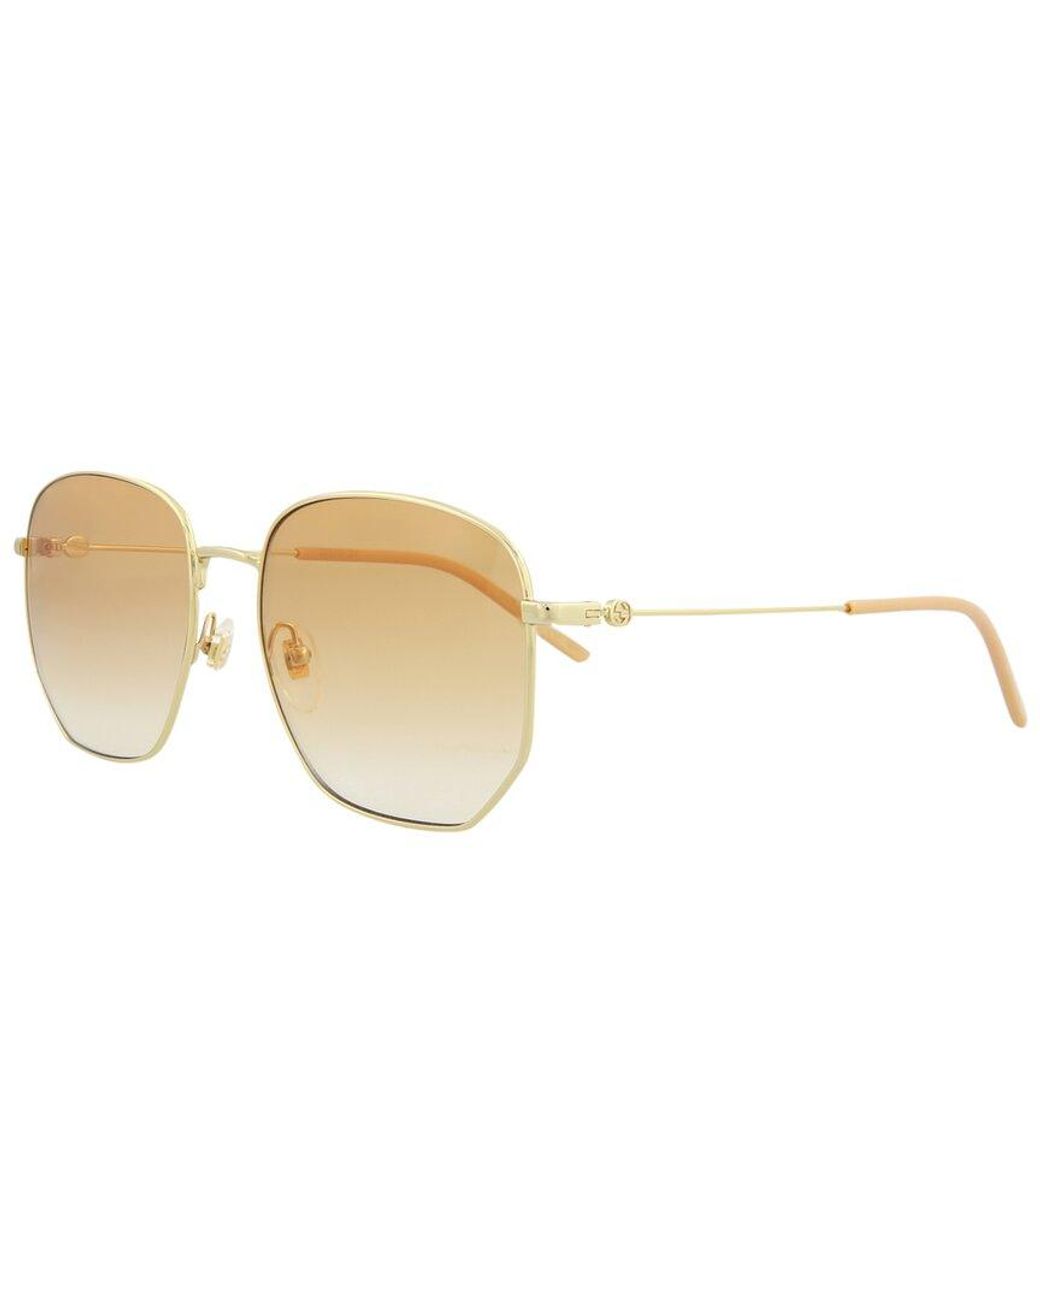 Gucci GG0396S 56mm Sunglasses in White | Lyst